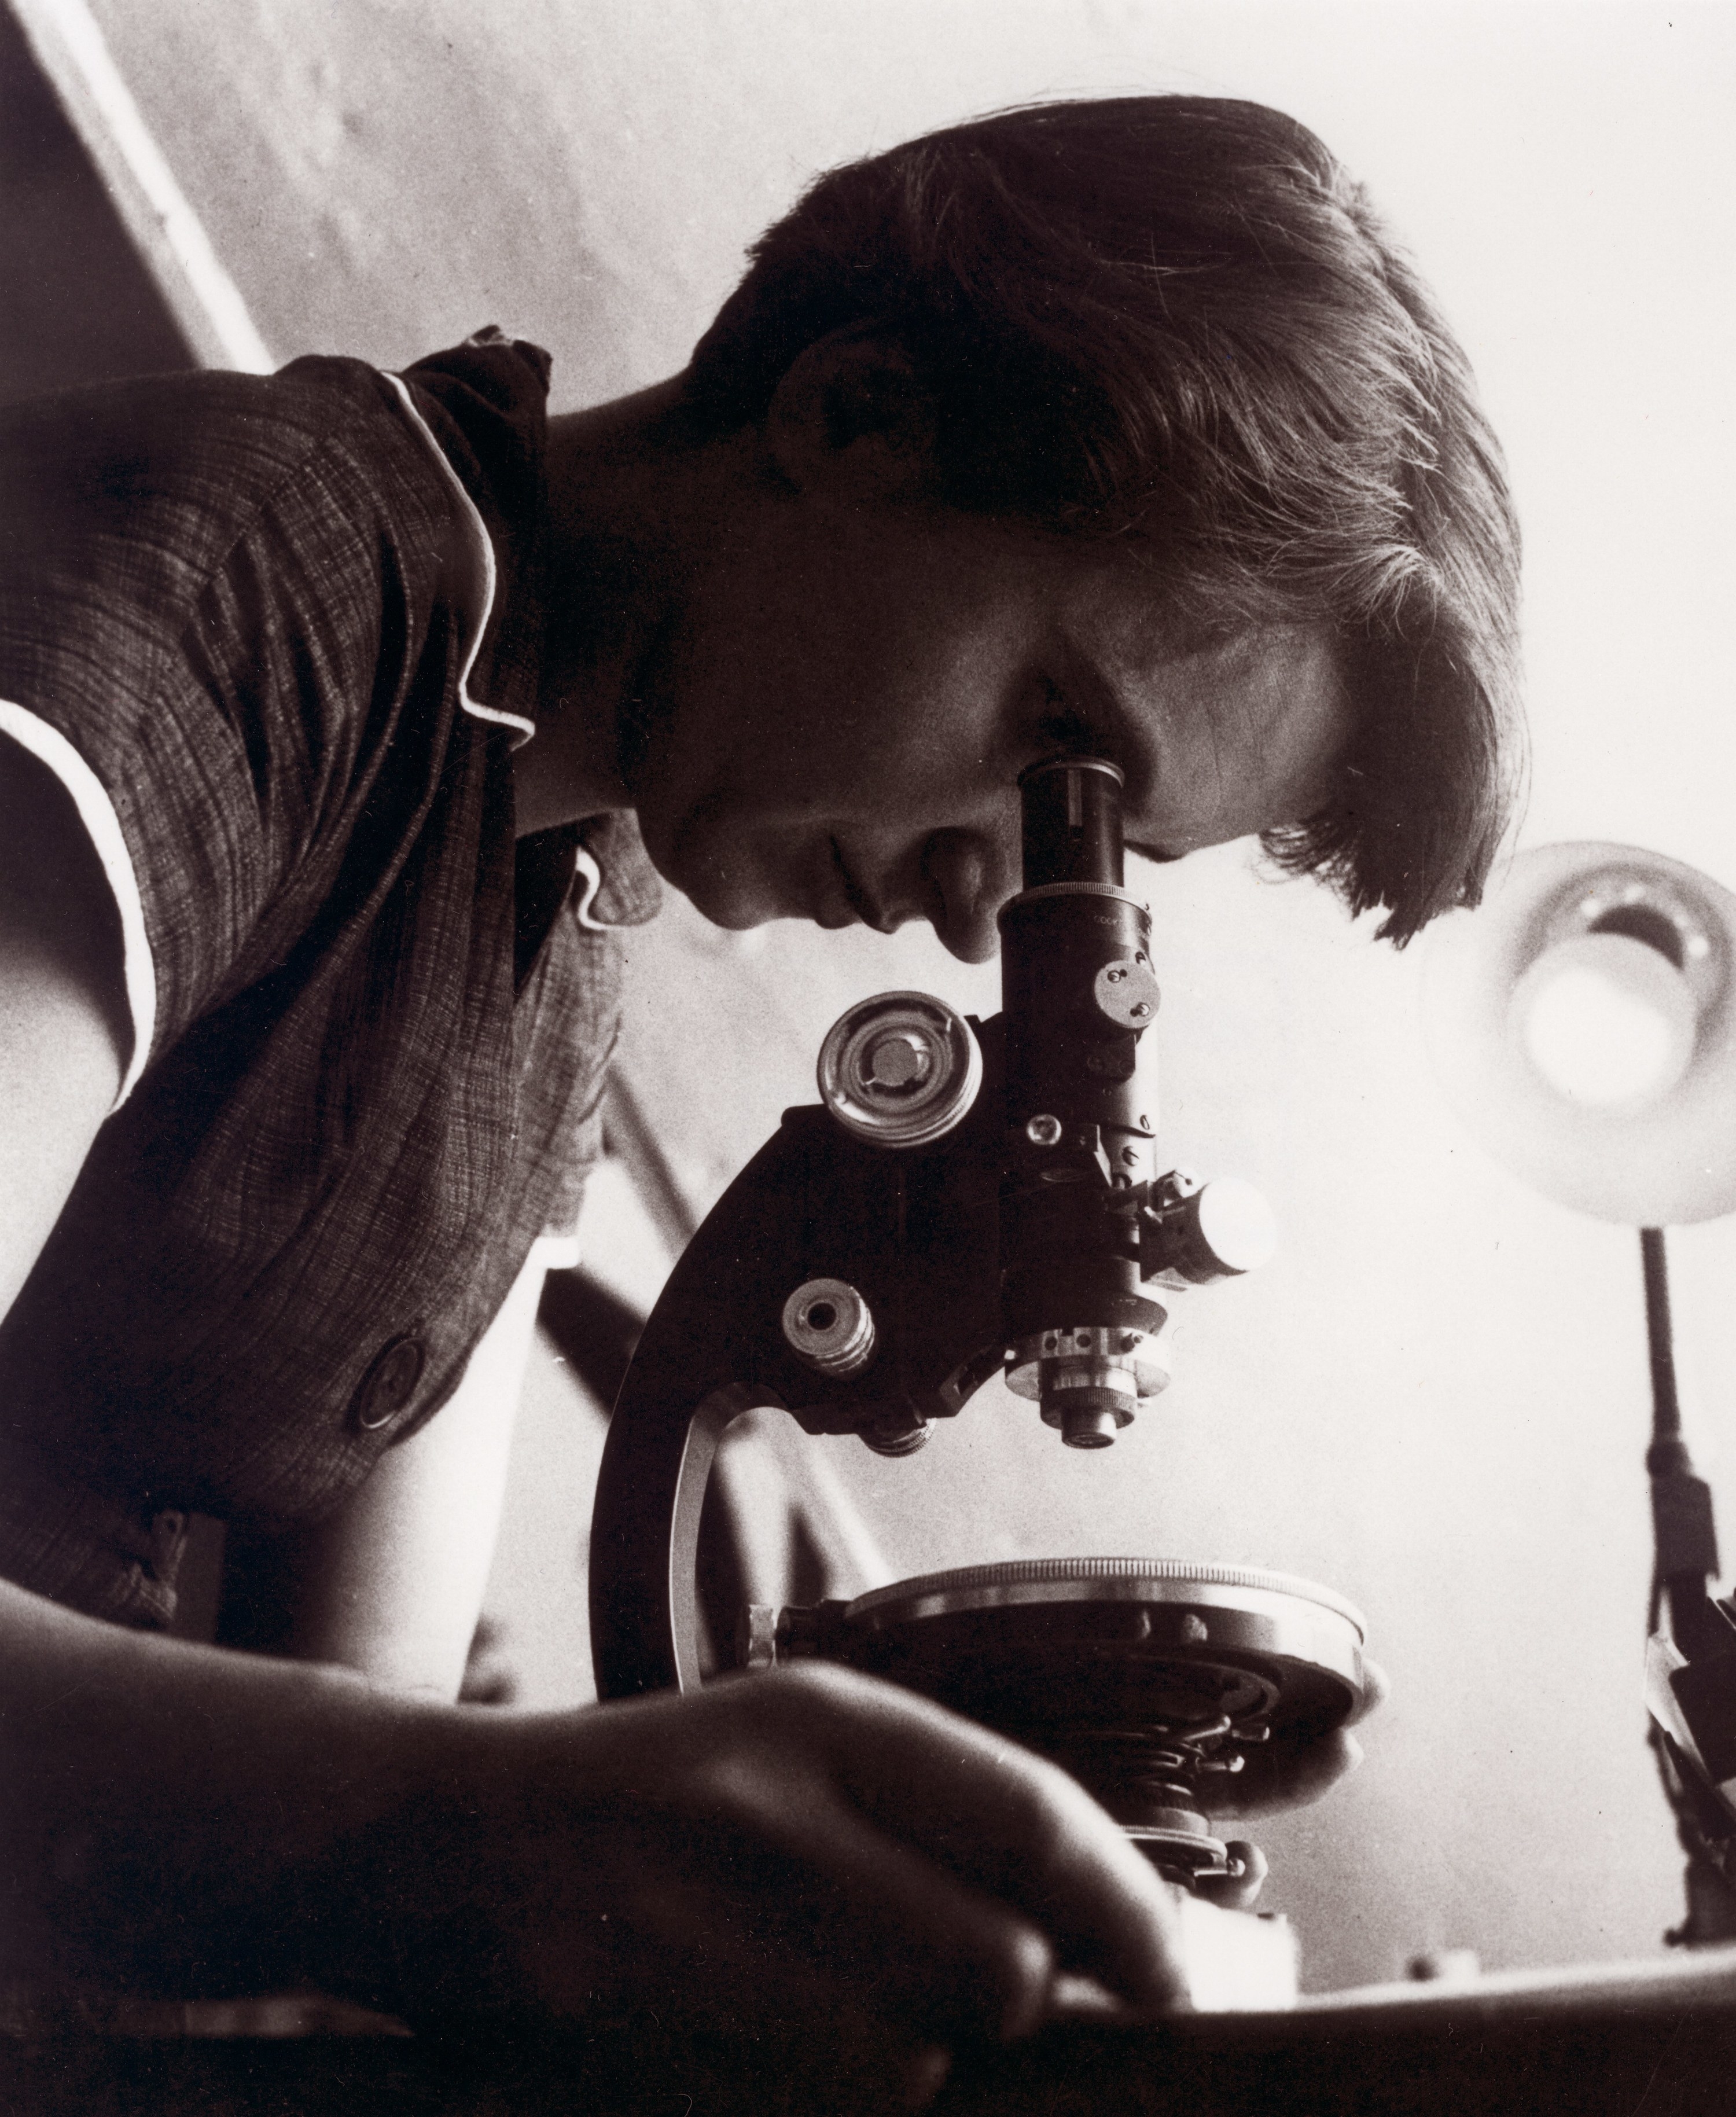 Rosalind looking down a microscope, wearing a tweed type dress.